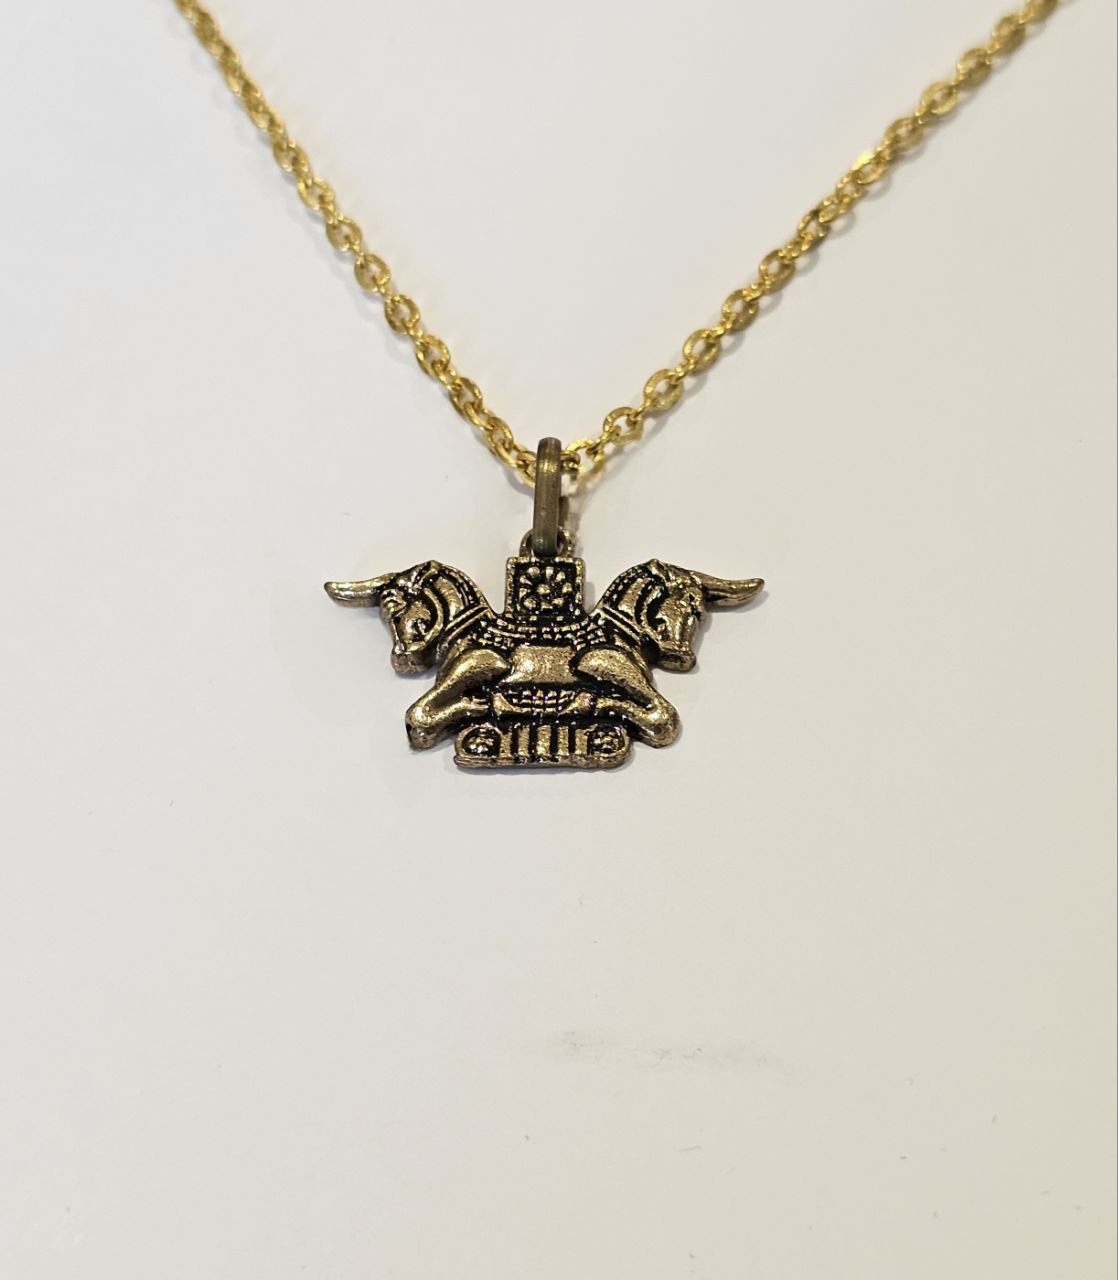 Hand made brass necklace